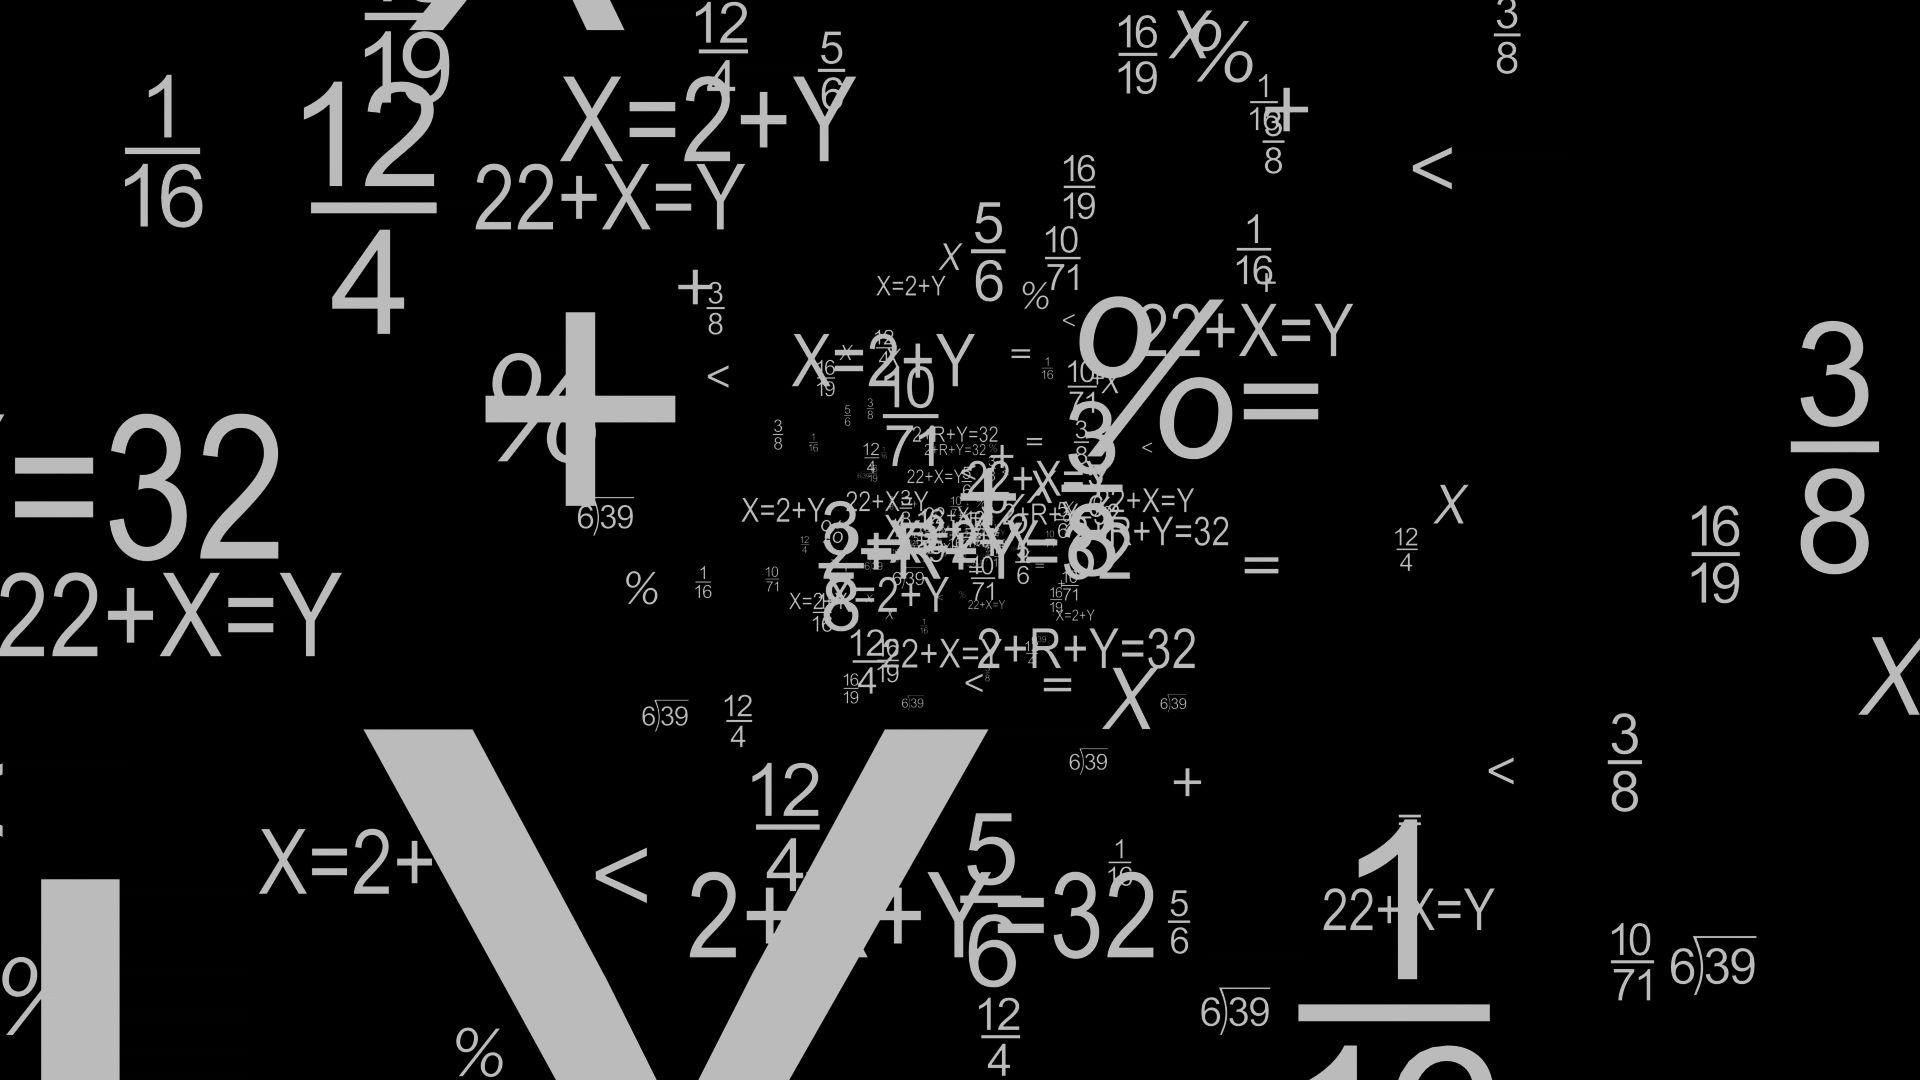 Maths wallpaper wallpaper free download 1440×900 Math Picture